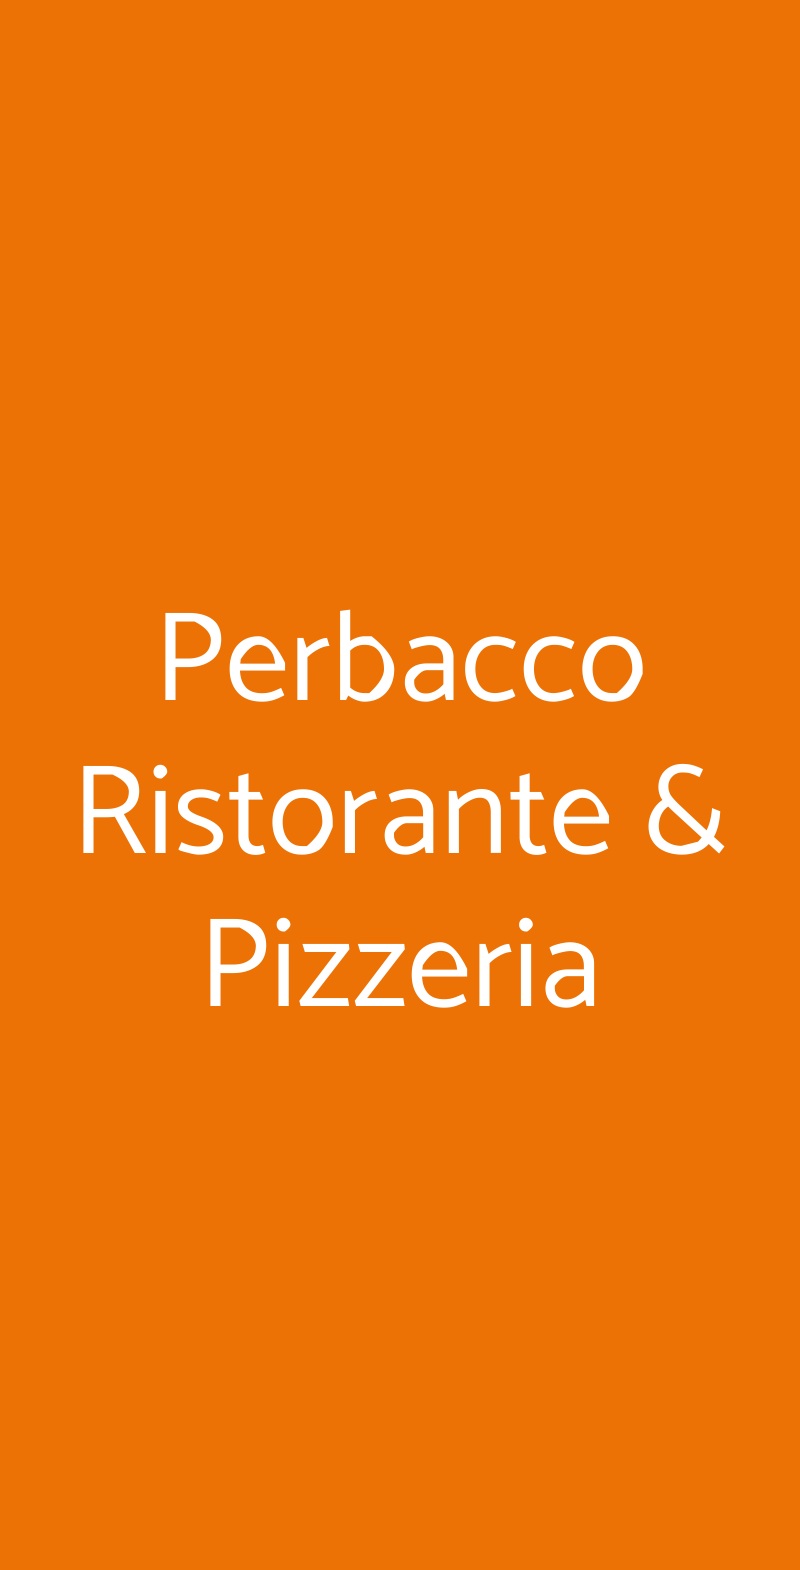 Perbacco Ristorante & Pizzeria Torino menù 1 pagina